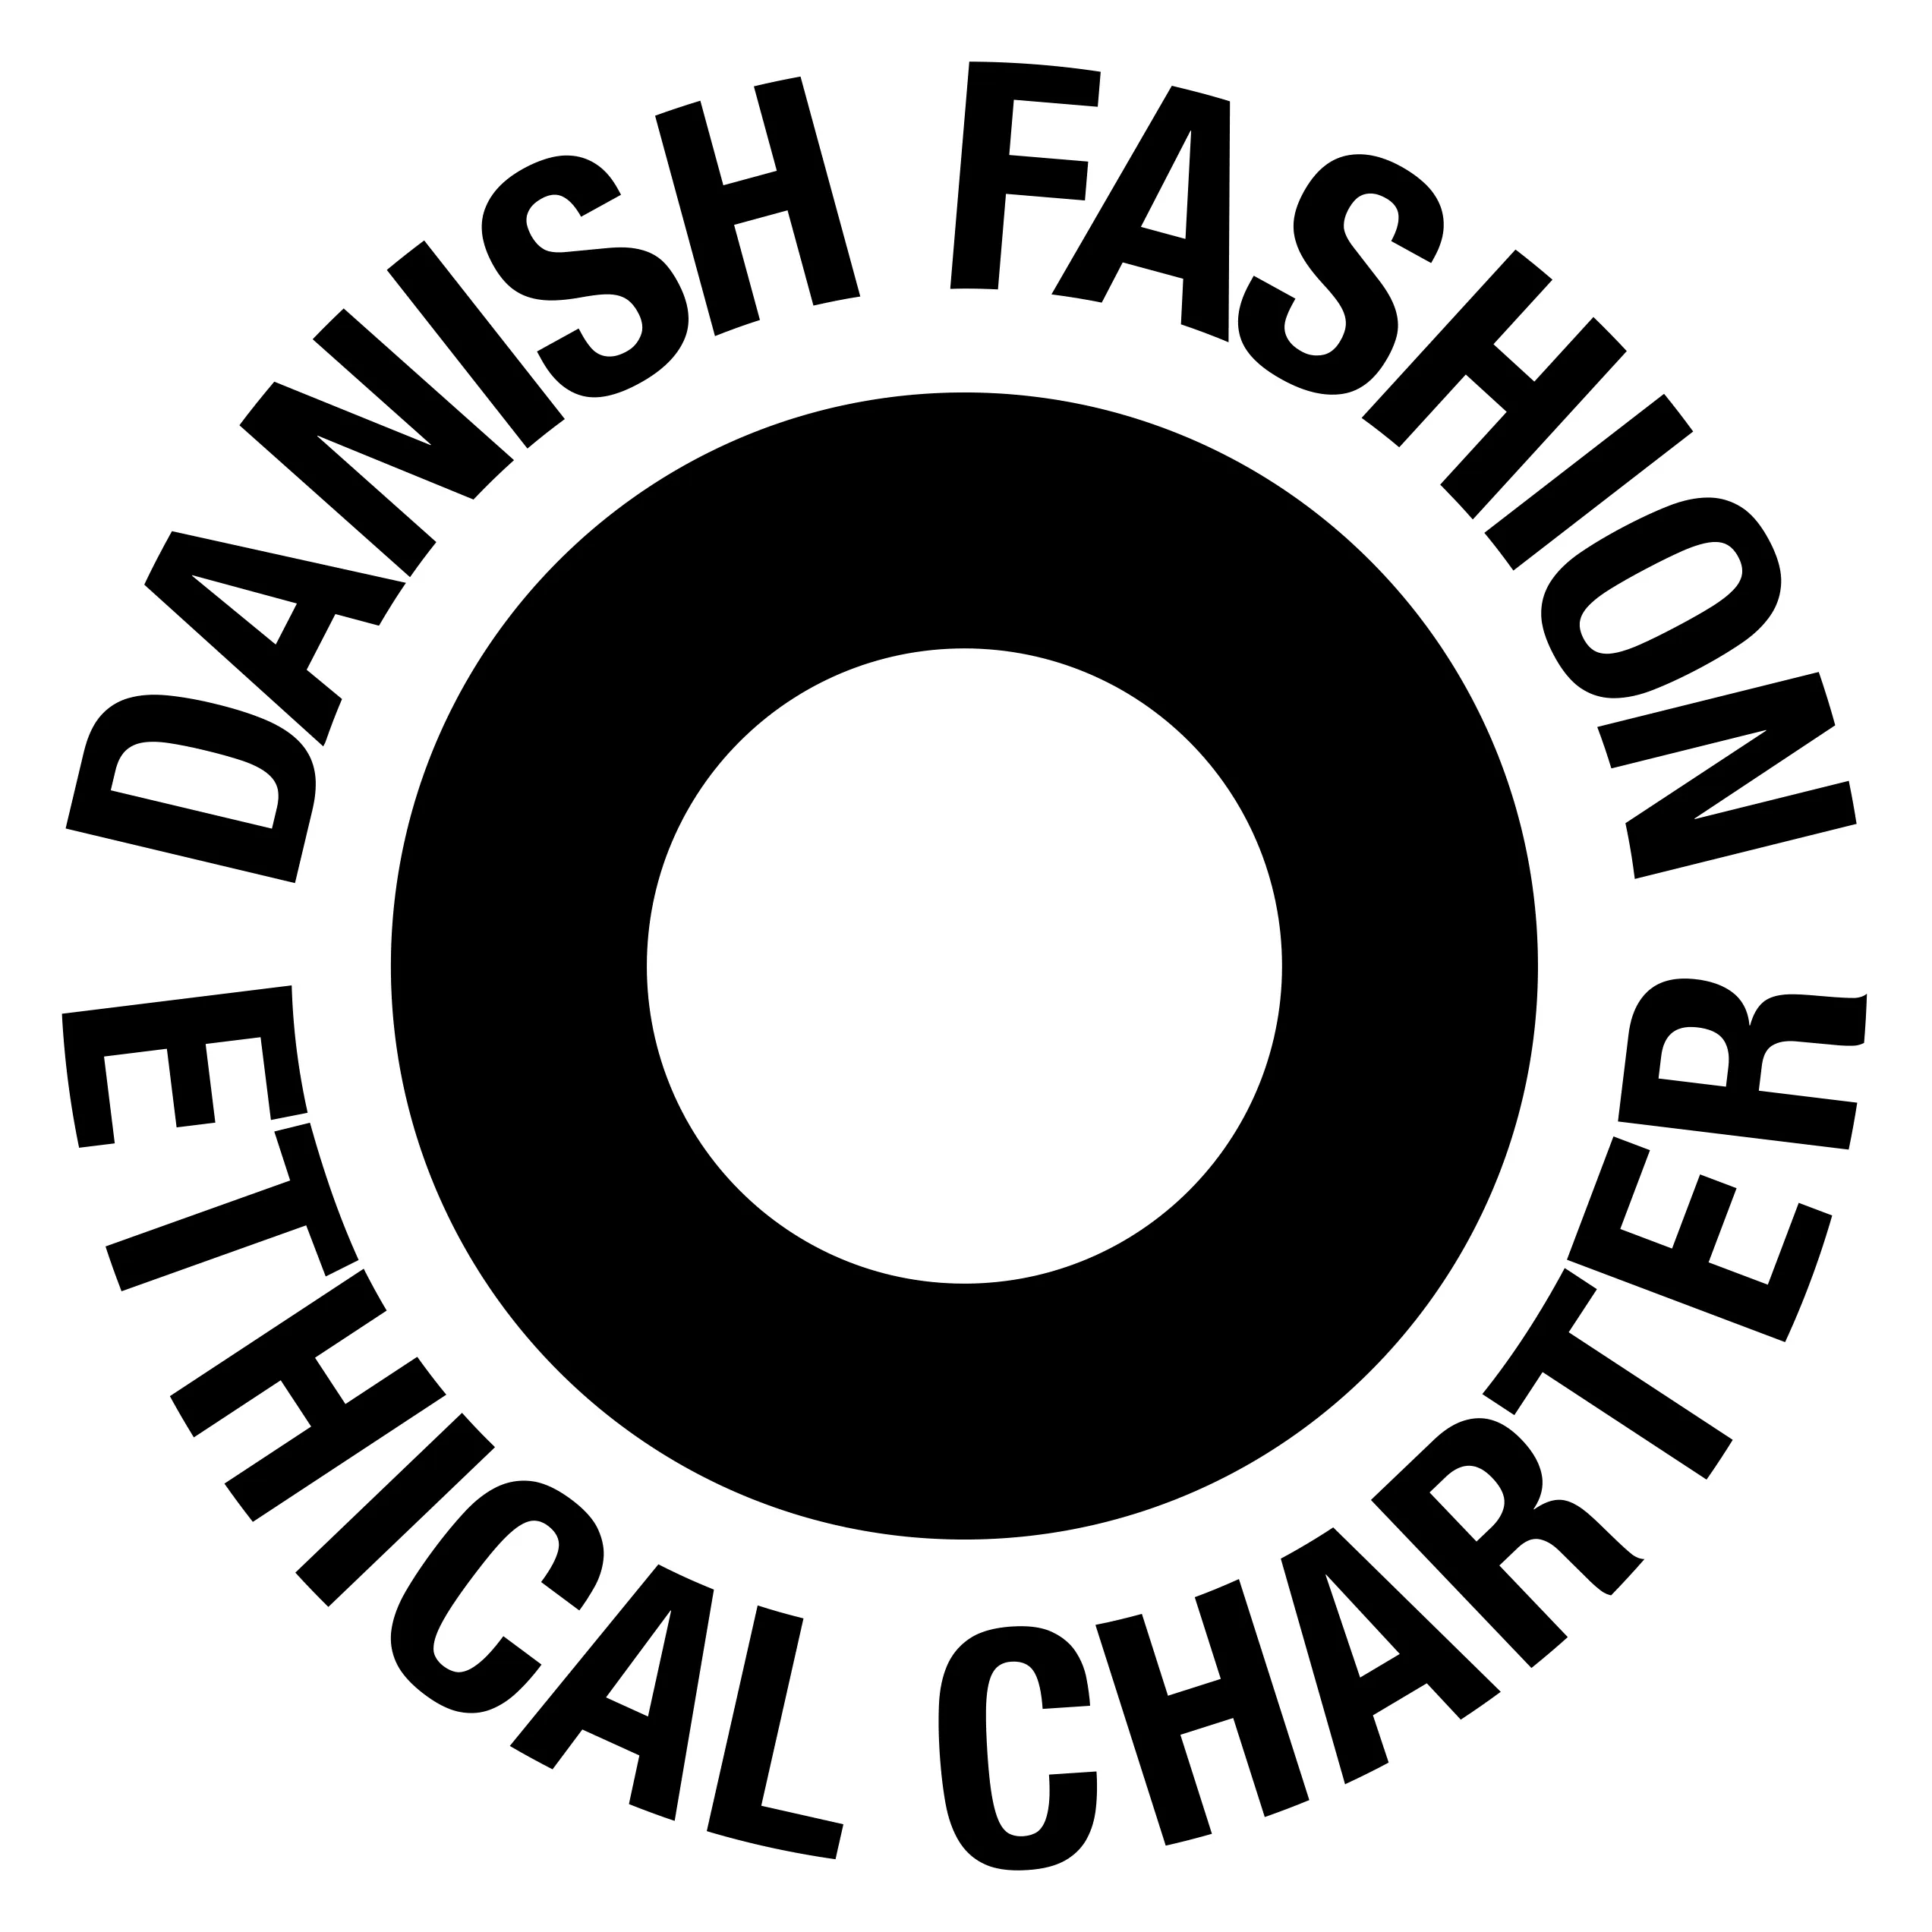 Modebranchens etiske charter icon